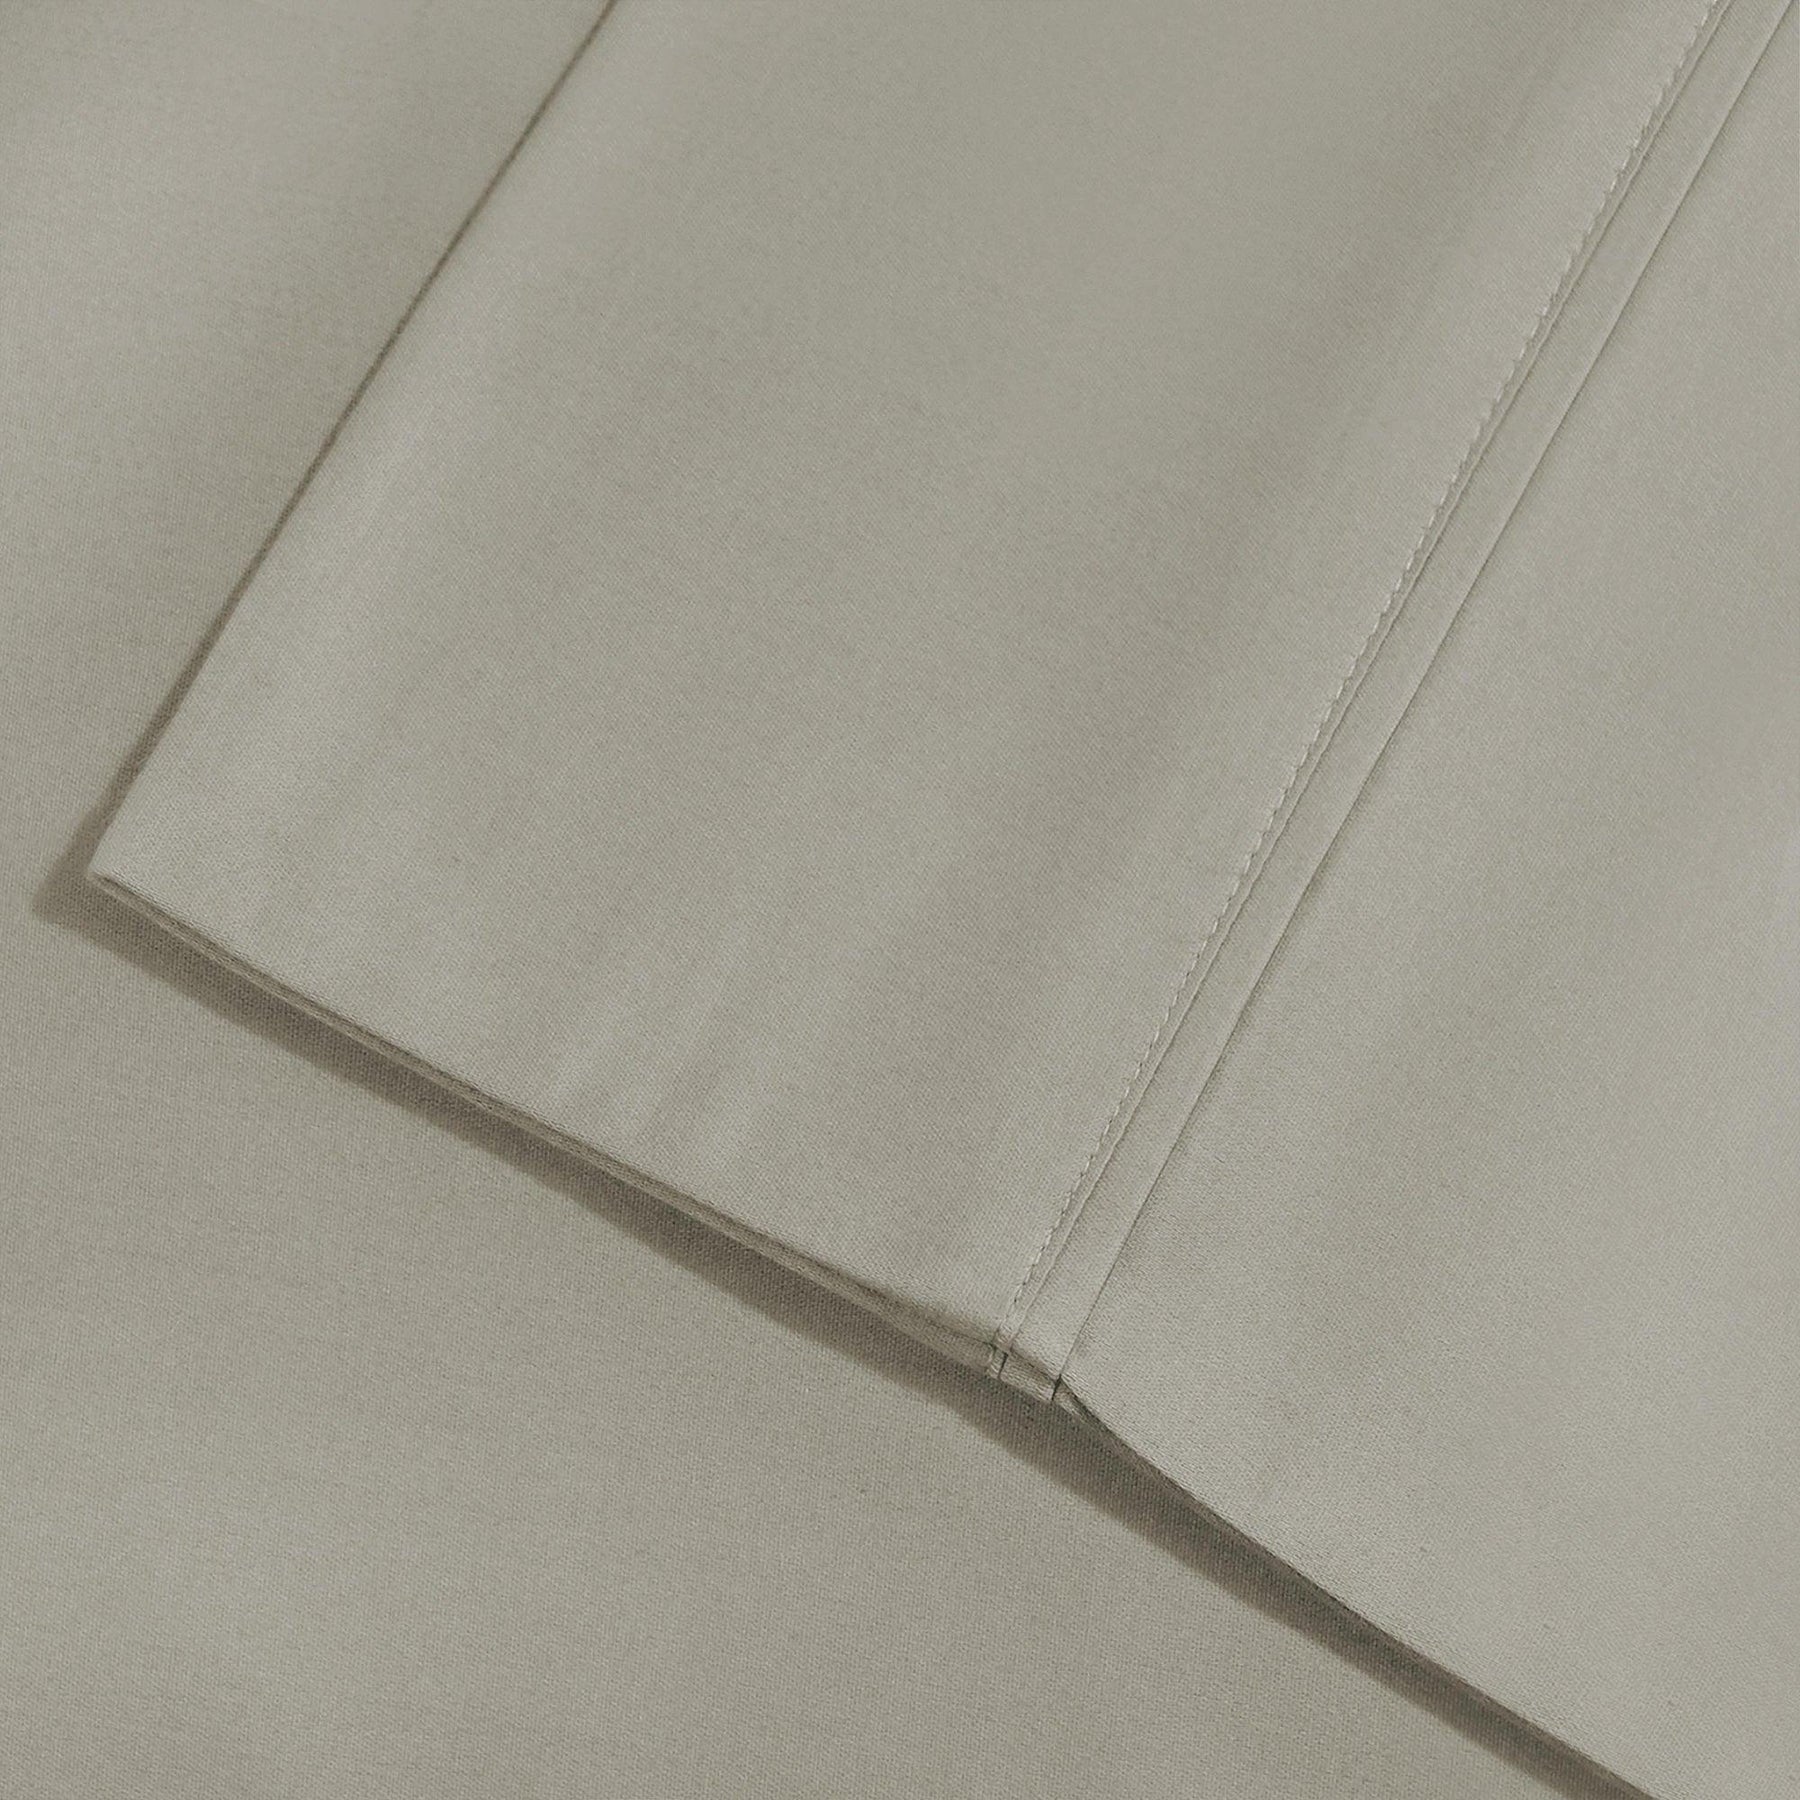  Superior Solid Count Cotton Blend Deep Pocket Sheet Set - Stone